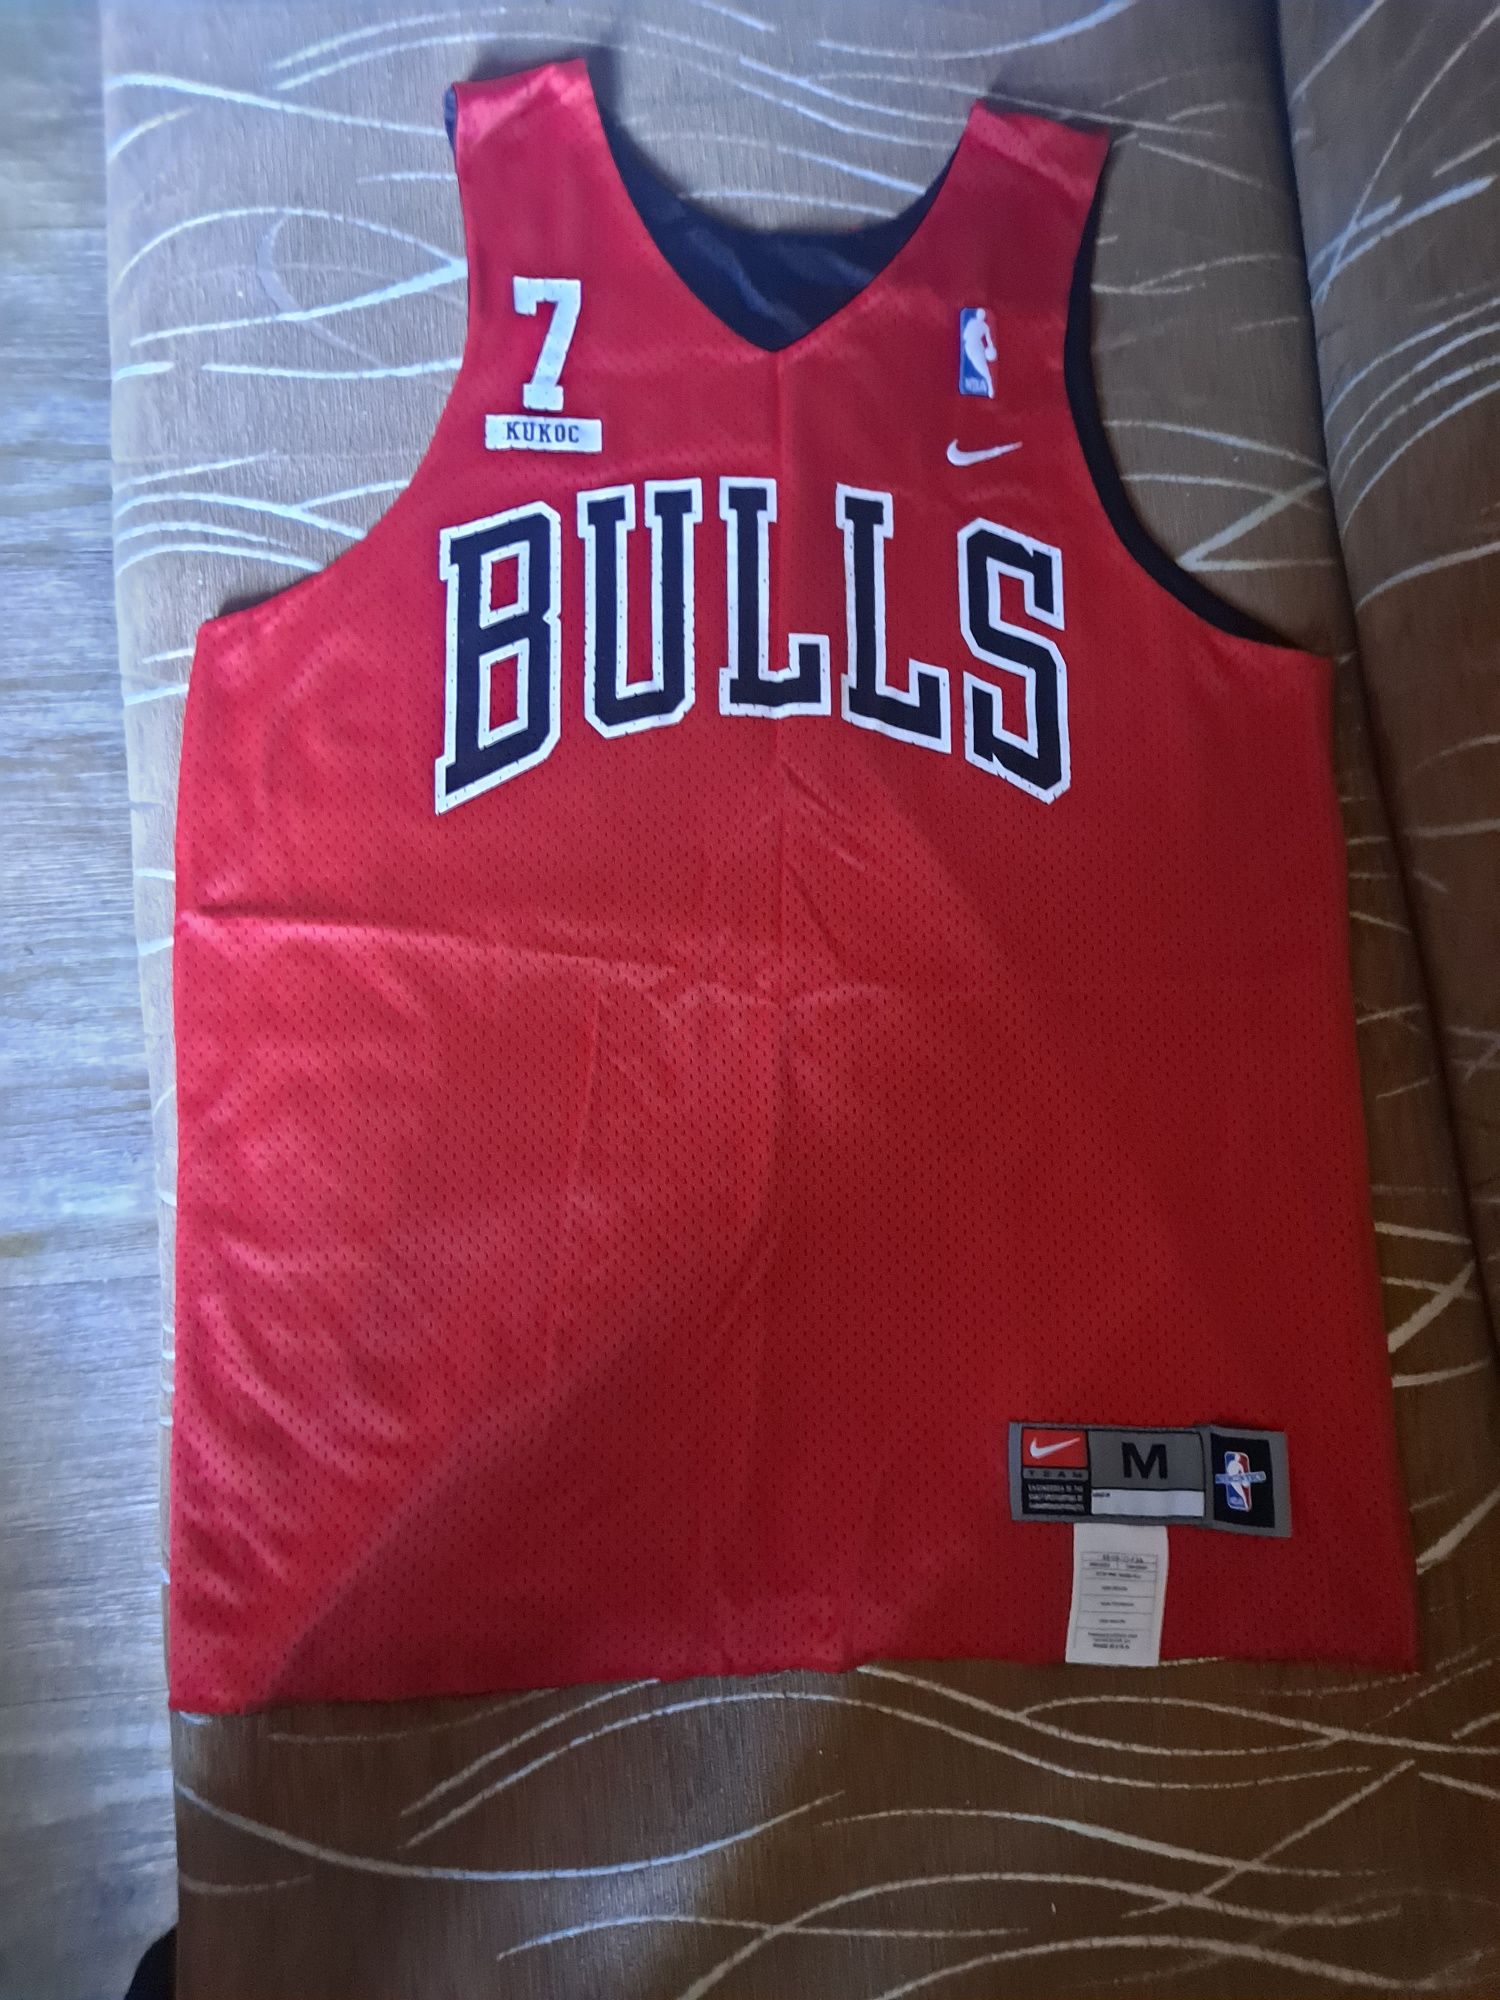 Koszulka NBA nike  Kukoc Chicago Bulls rozmiar M dwustronna 52 cm szer